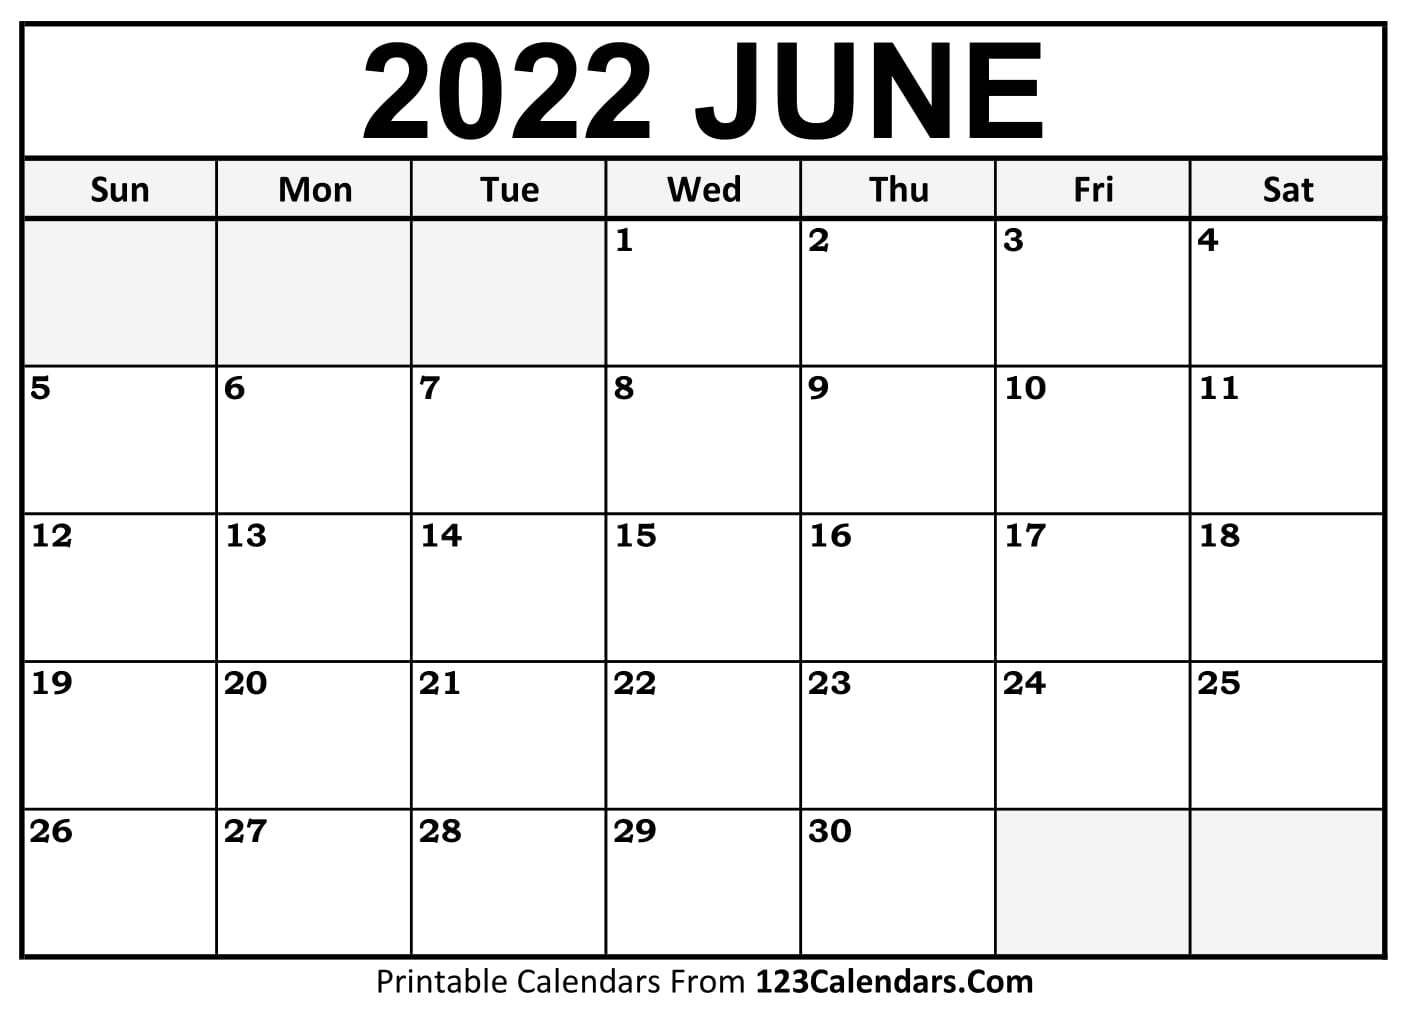 Printable Calendar 2022 June July August Printable June 2022 Calendar Templates - 123Calendars.com